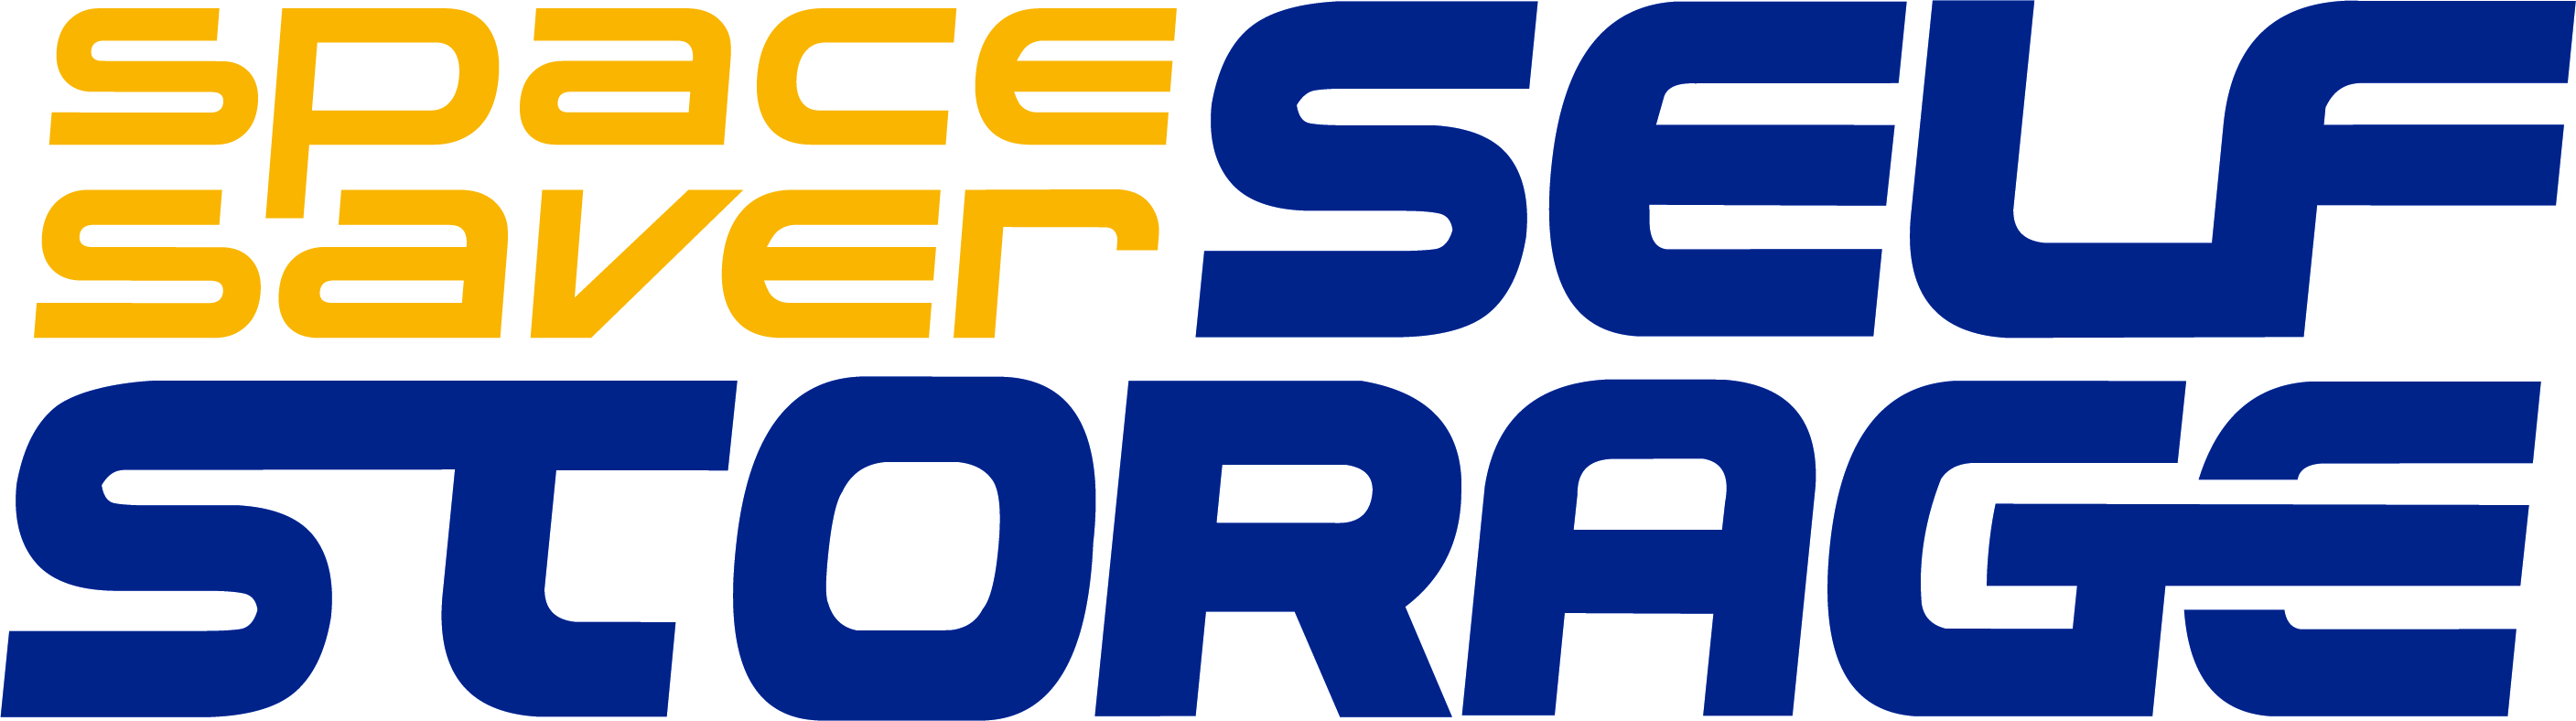 Space Saver Self Storage logo